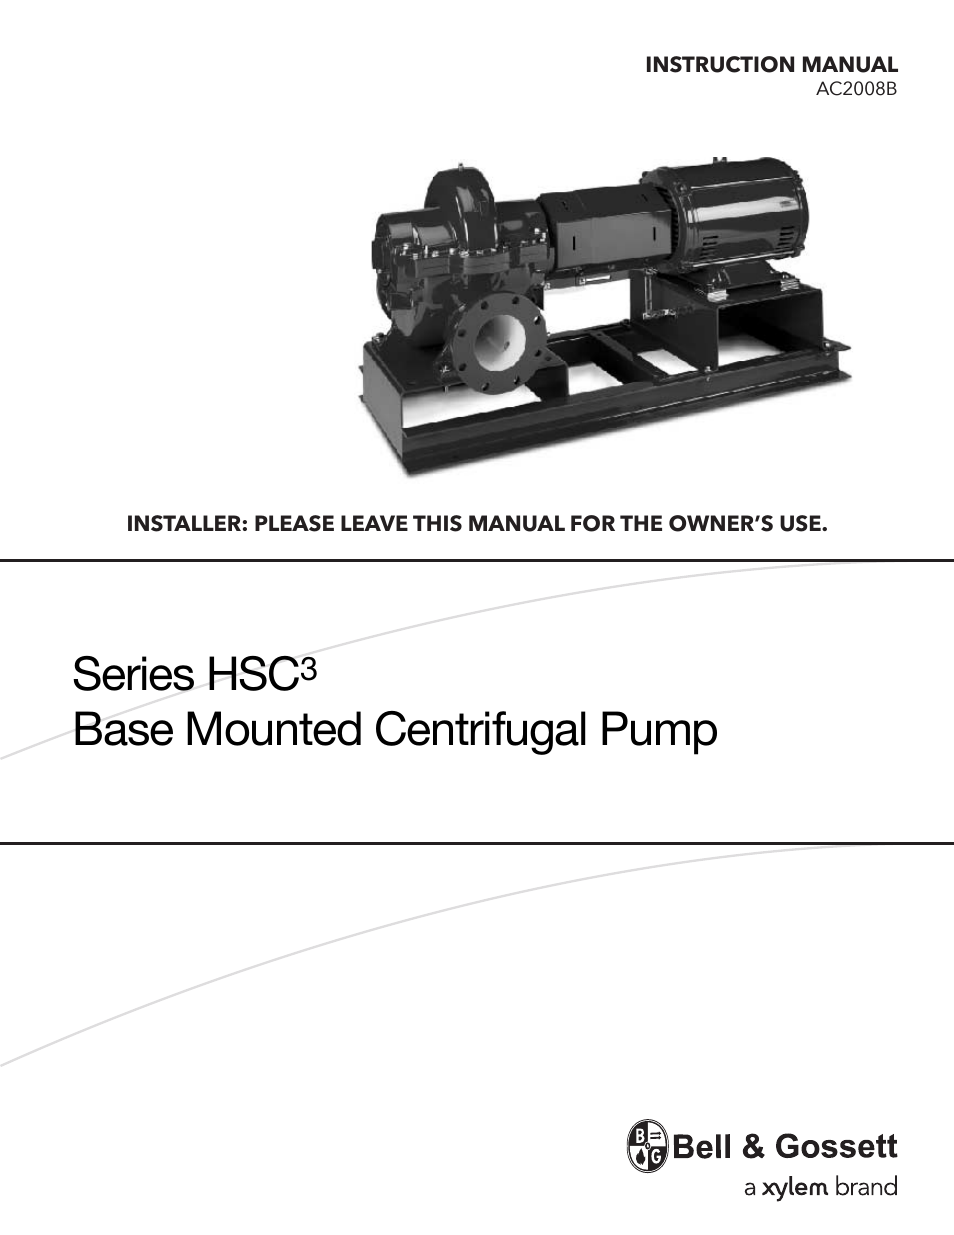 AC2008B Series HSC3 Base Mounted Centrifugal Pump